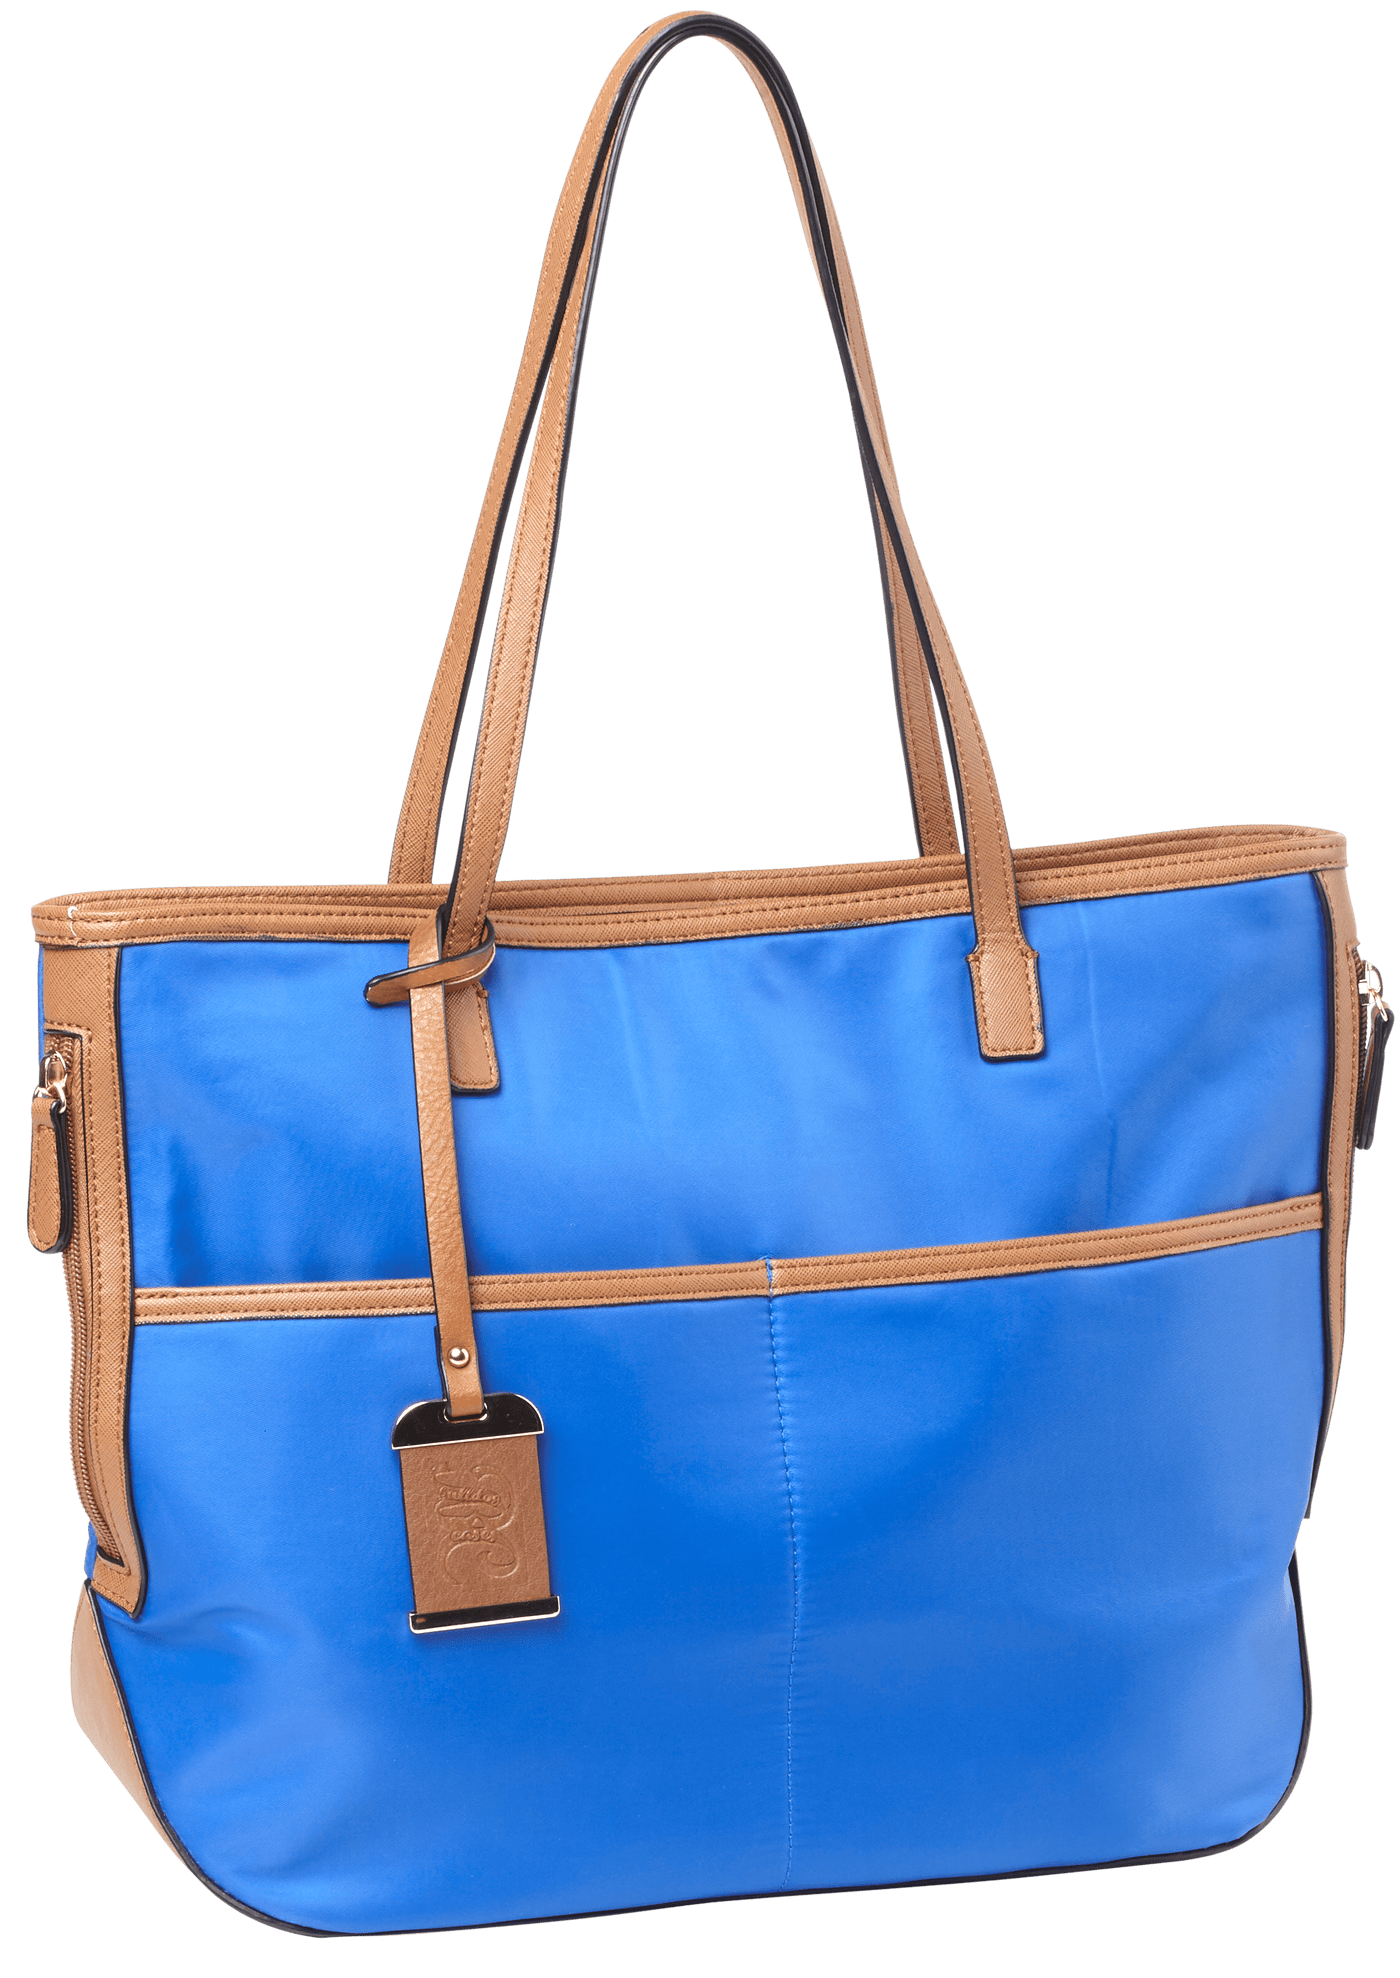 Chanel Old Medium Boy Bag Electric Blue Patent 19 Series | eBay